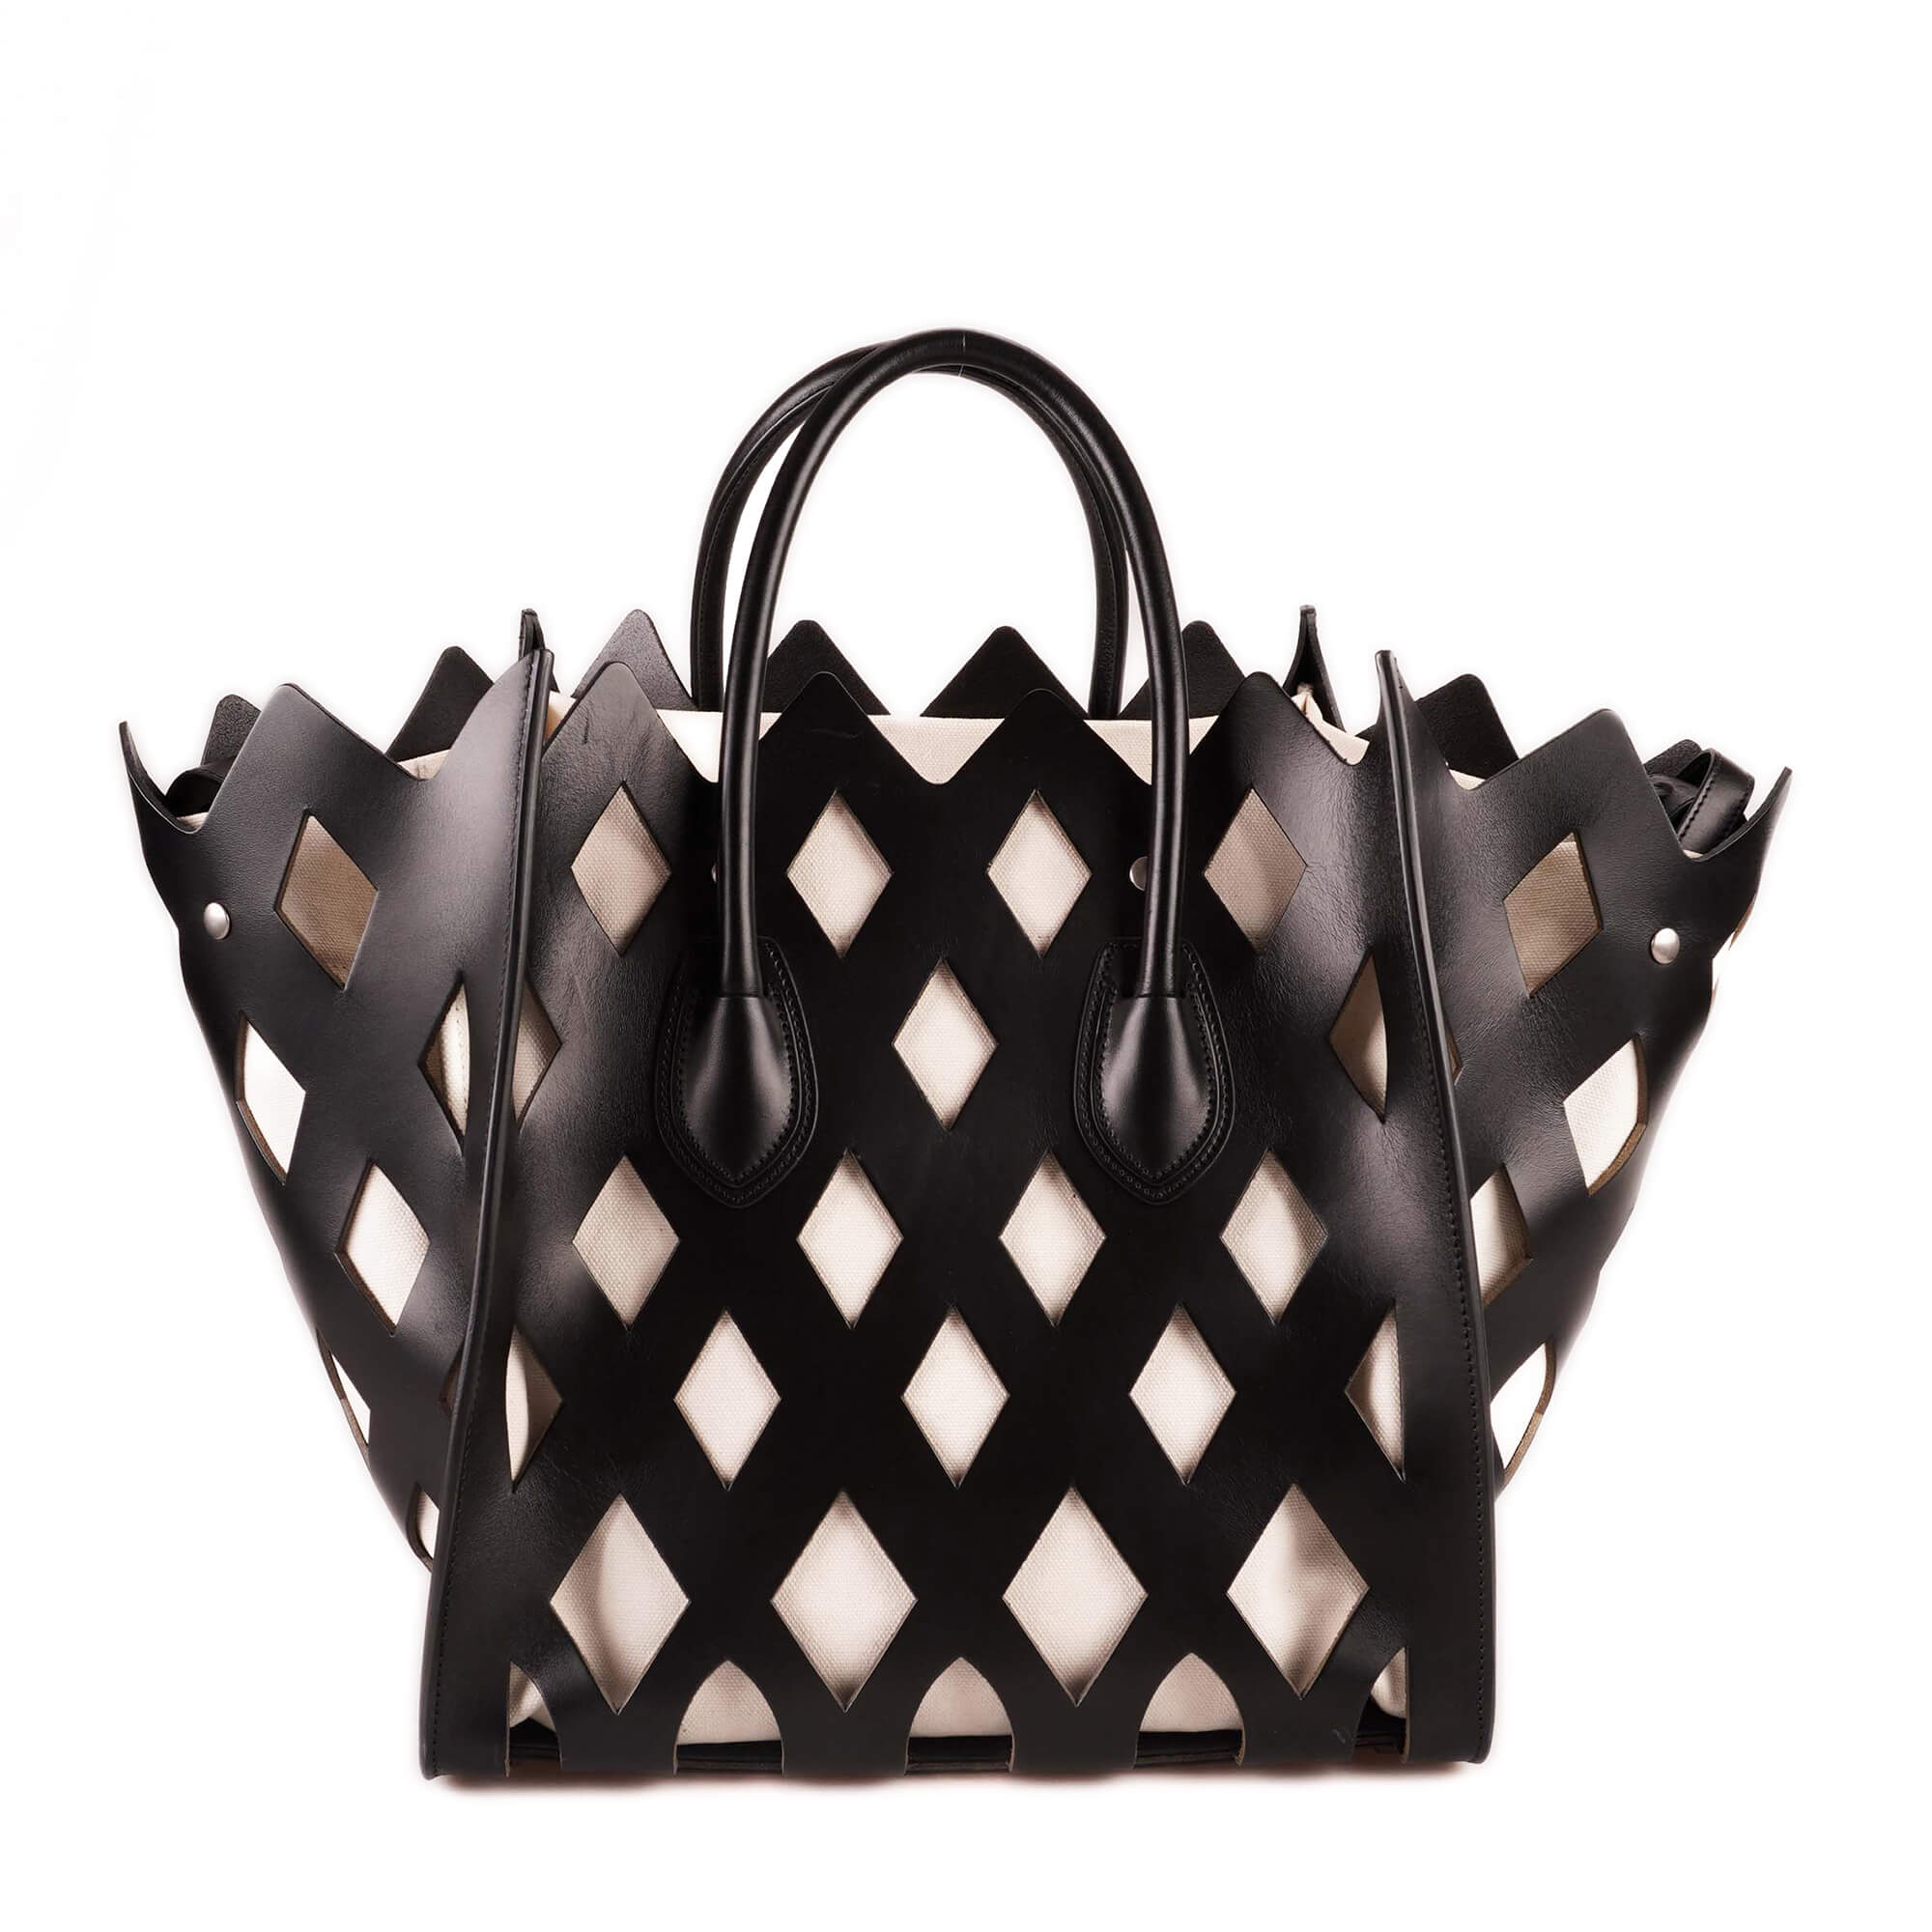 Celine - Black / White Cut Out Leather Medium Phantom Luggage Bag